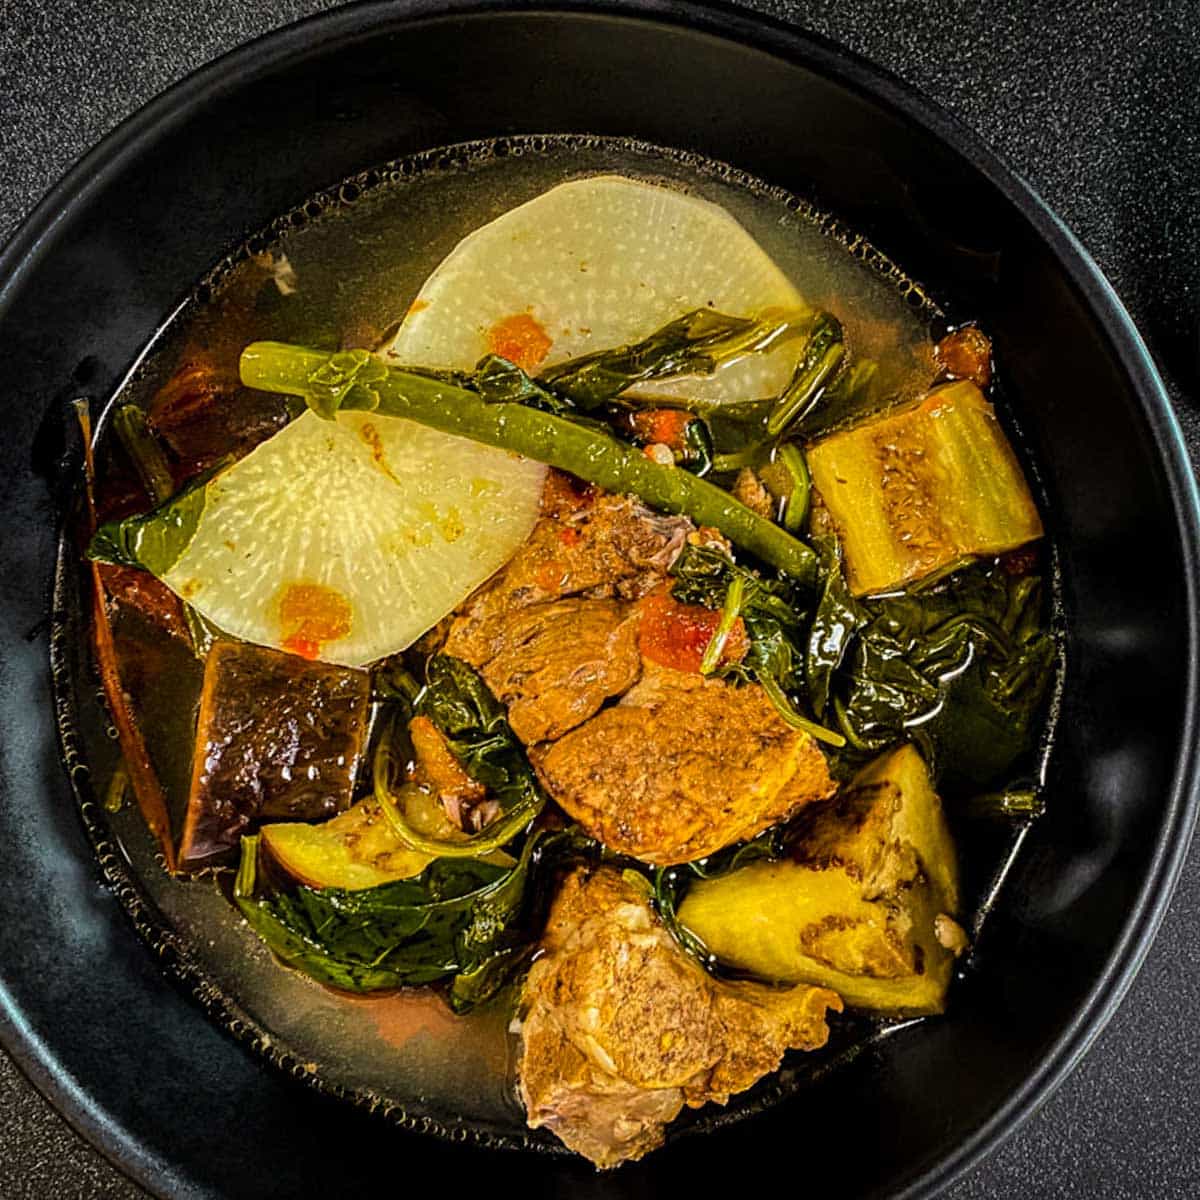 Pork Sinigang with vegetables in a black bowl.